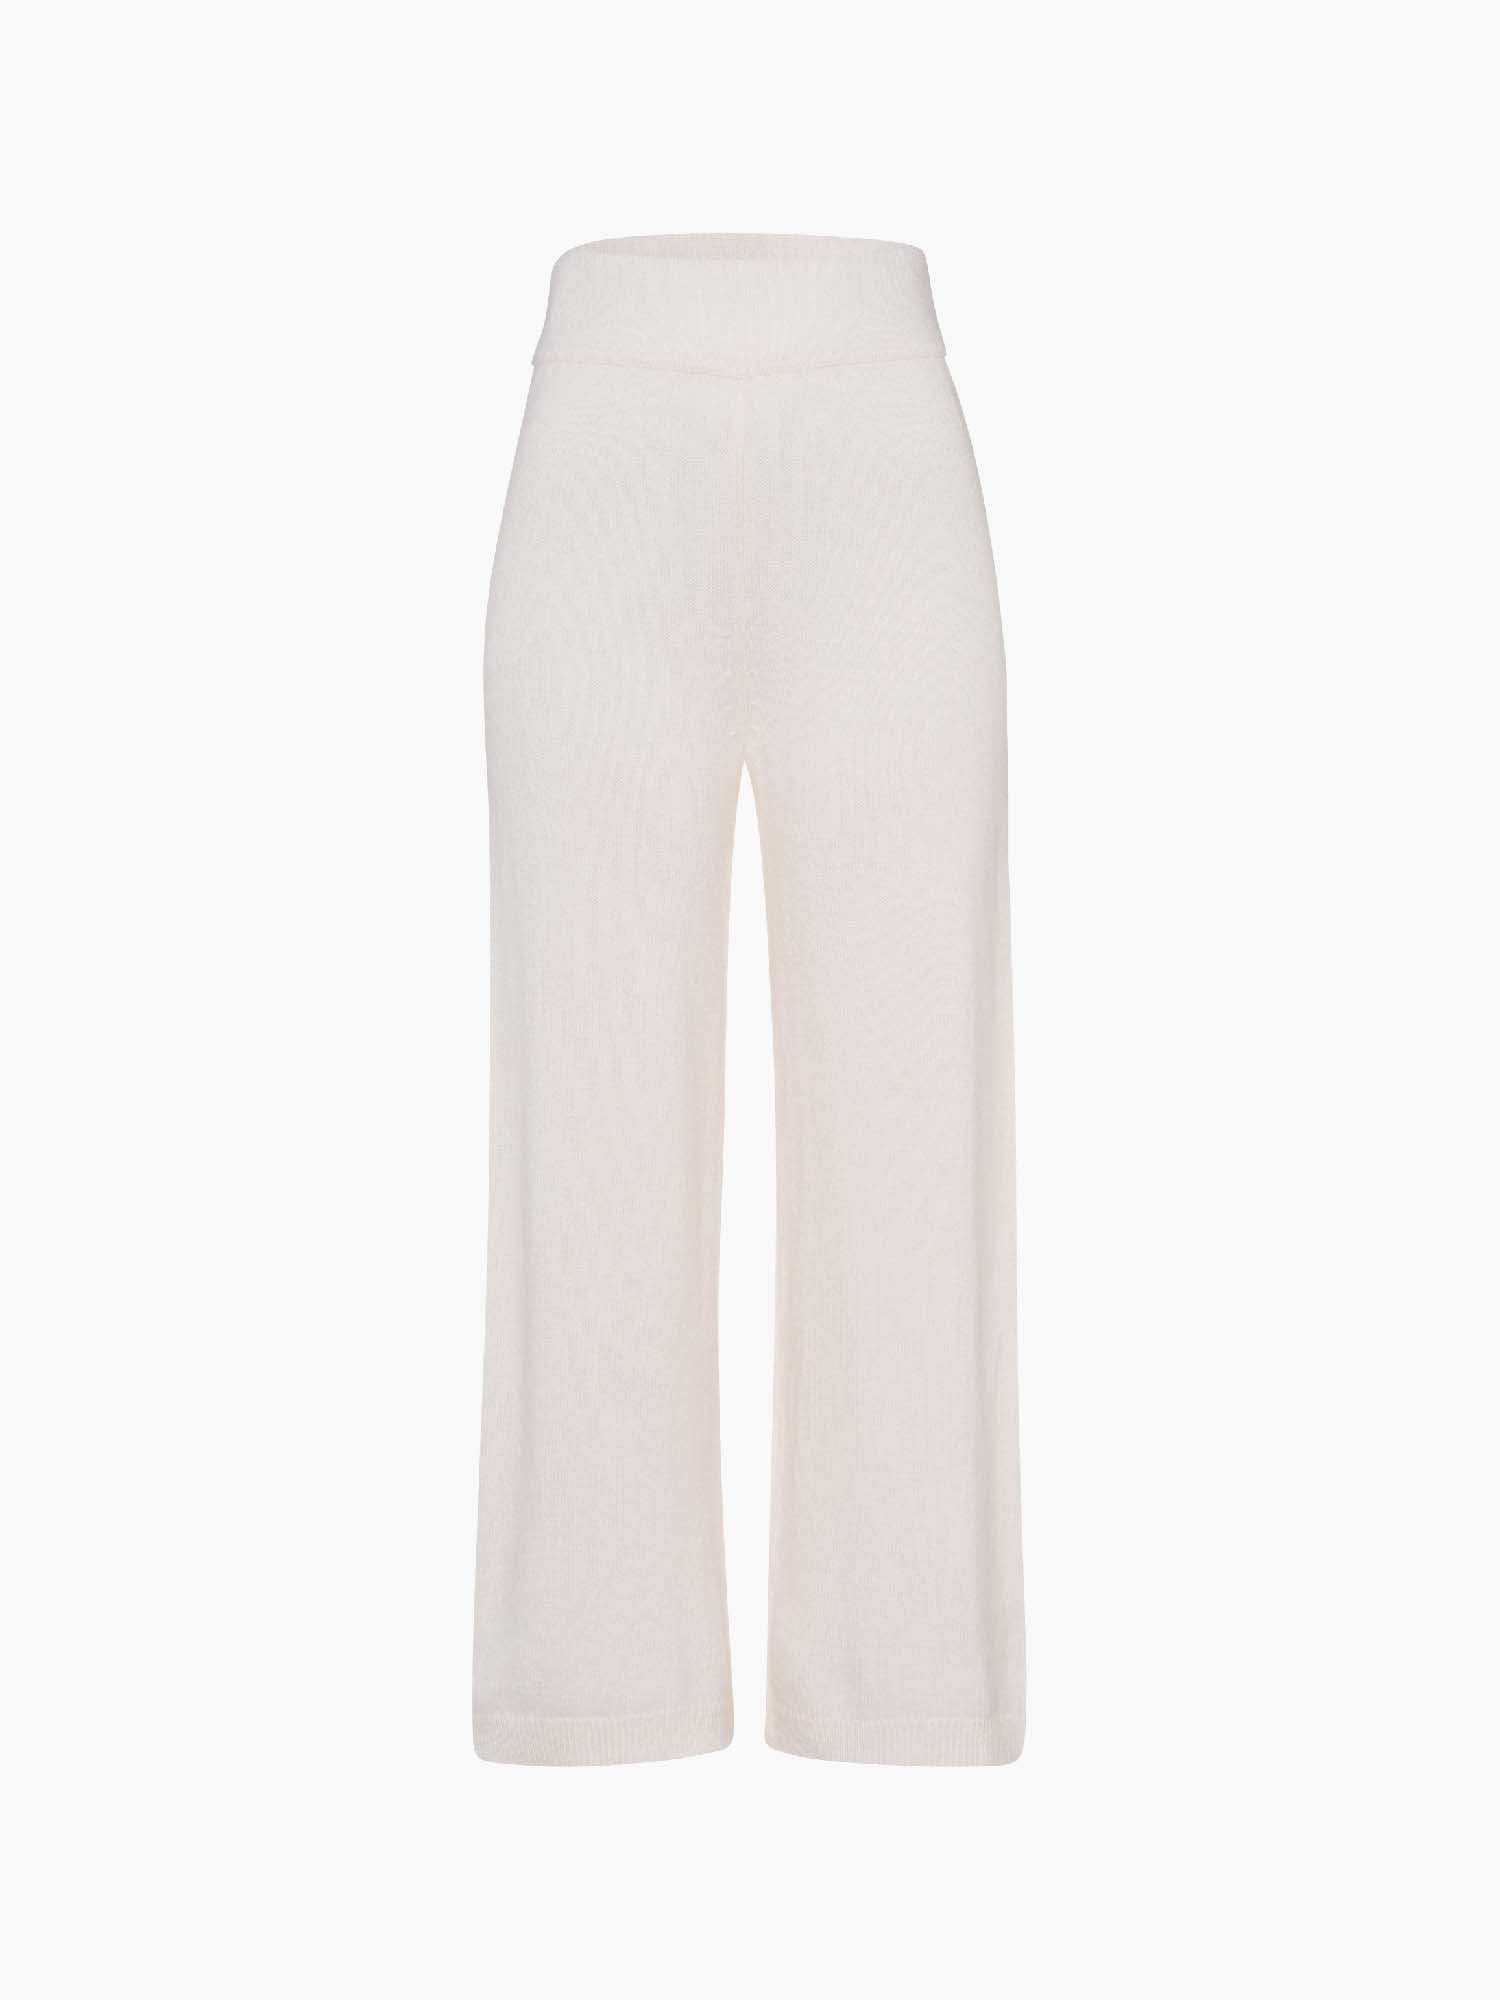 FTC-CASHMERE-OUTLET-SALE-Trousers wide 100% Cashmere-Hosen-XS-Pristine White-MUNICH_VILLAGE-by-ARCHIVIST